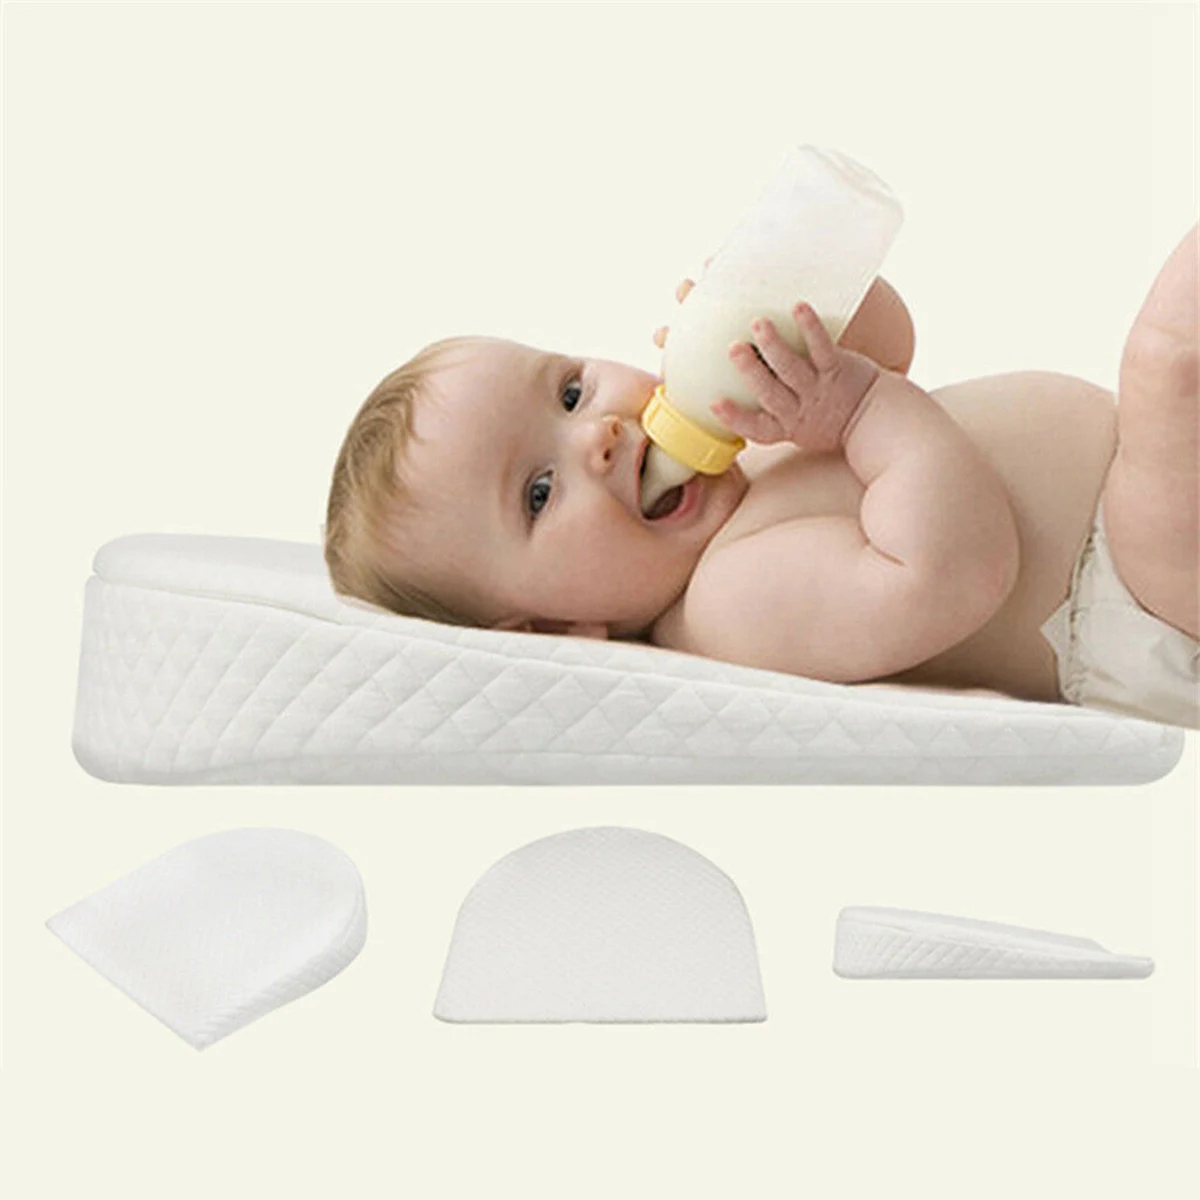 

Baby Anti-Spit Milk Wedges Pillow Newborn Reflux Slow Memory Foam Sleeping Pillows Infant Crib Inclines Mattress Position